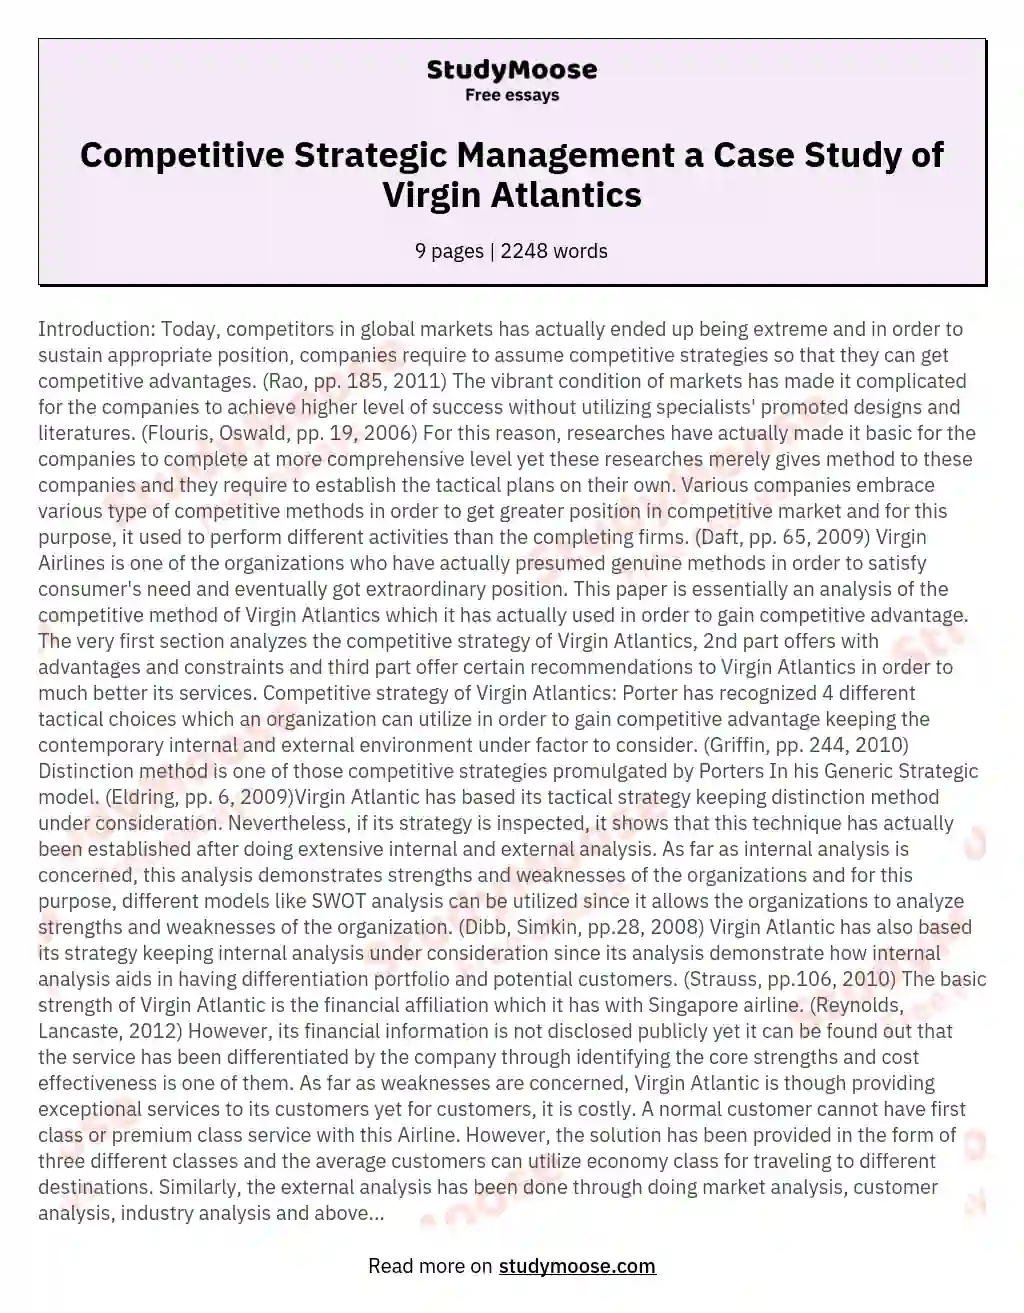 Competitive Strategic Management a Case Study of Virgin Atlantics